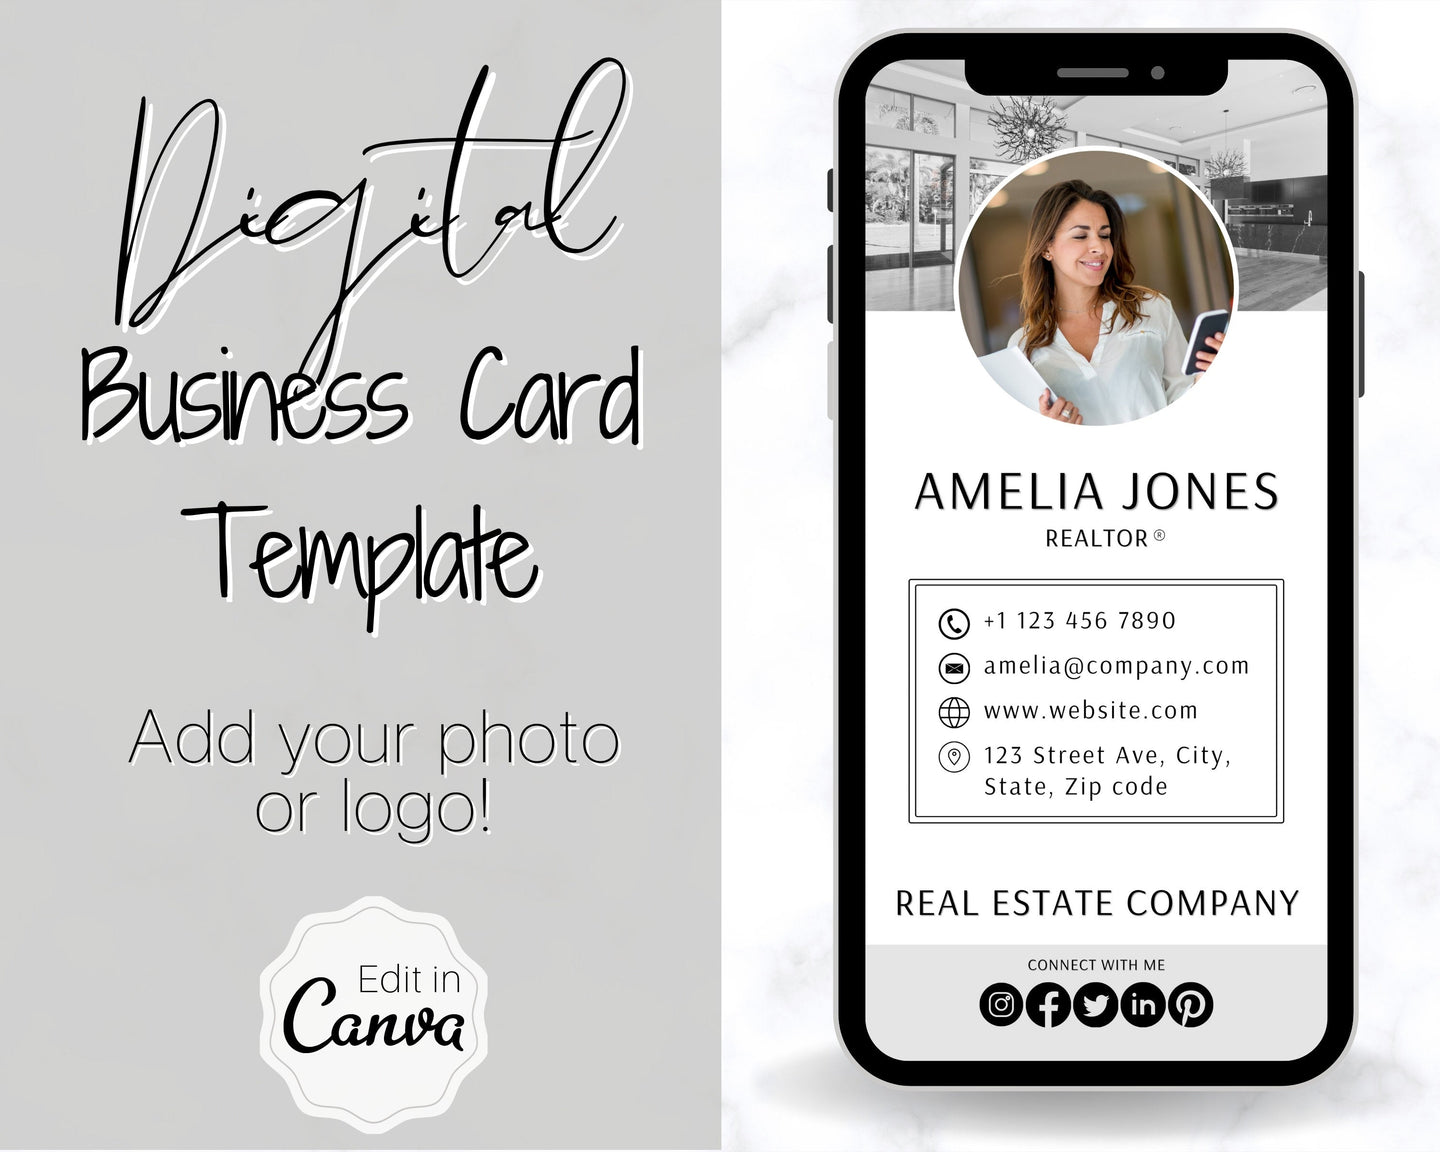 Digital Business Card Template. DIY add logo & photo! Editable Canva Design. Modern, Realtor Marketing, Real Estate, Realty Professional | Mono Style 1